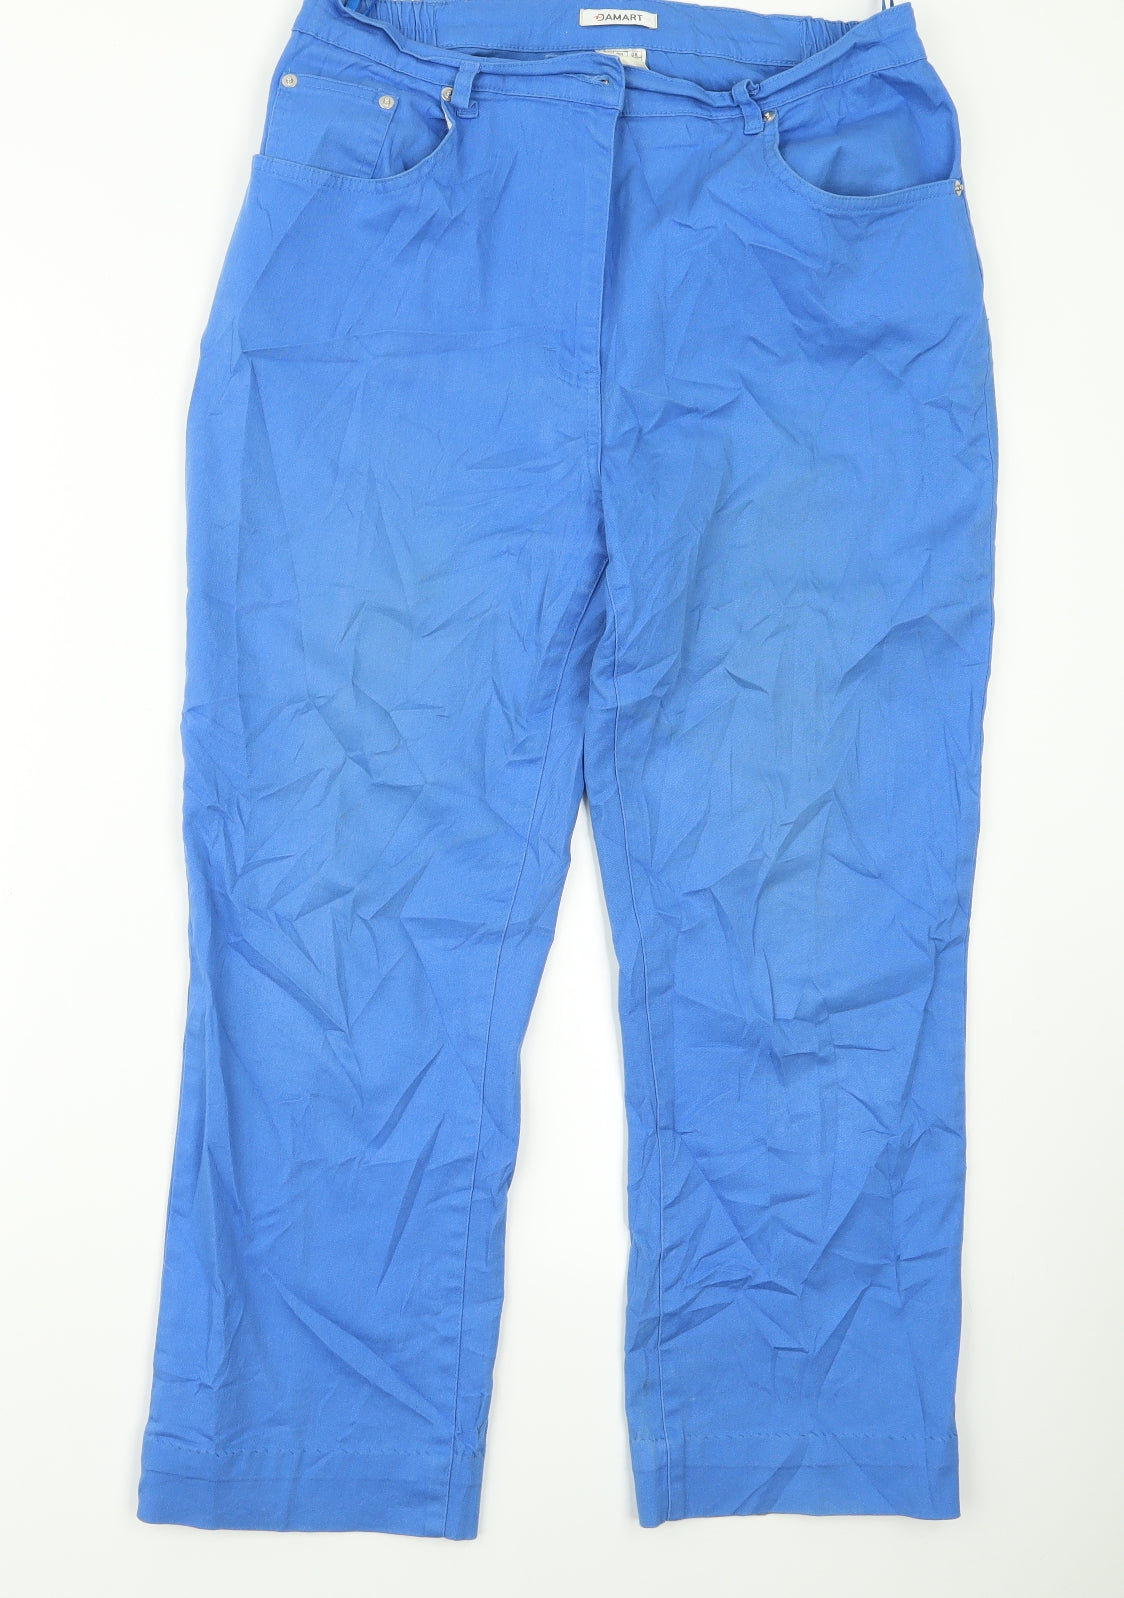 Damart Womens Blue Trousers Size 14 L23 in Rewards - Monetha